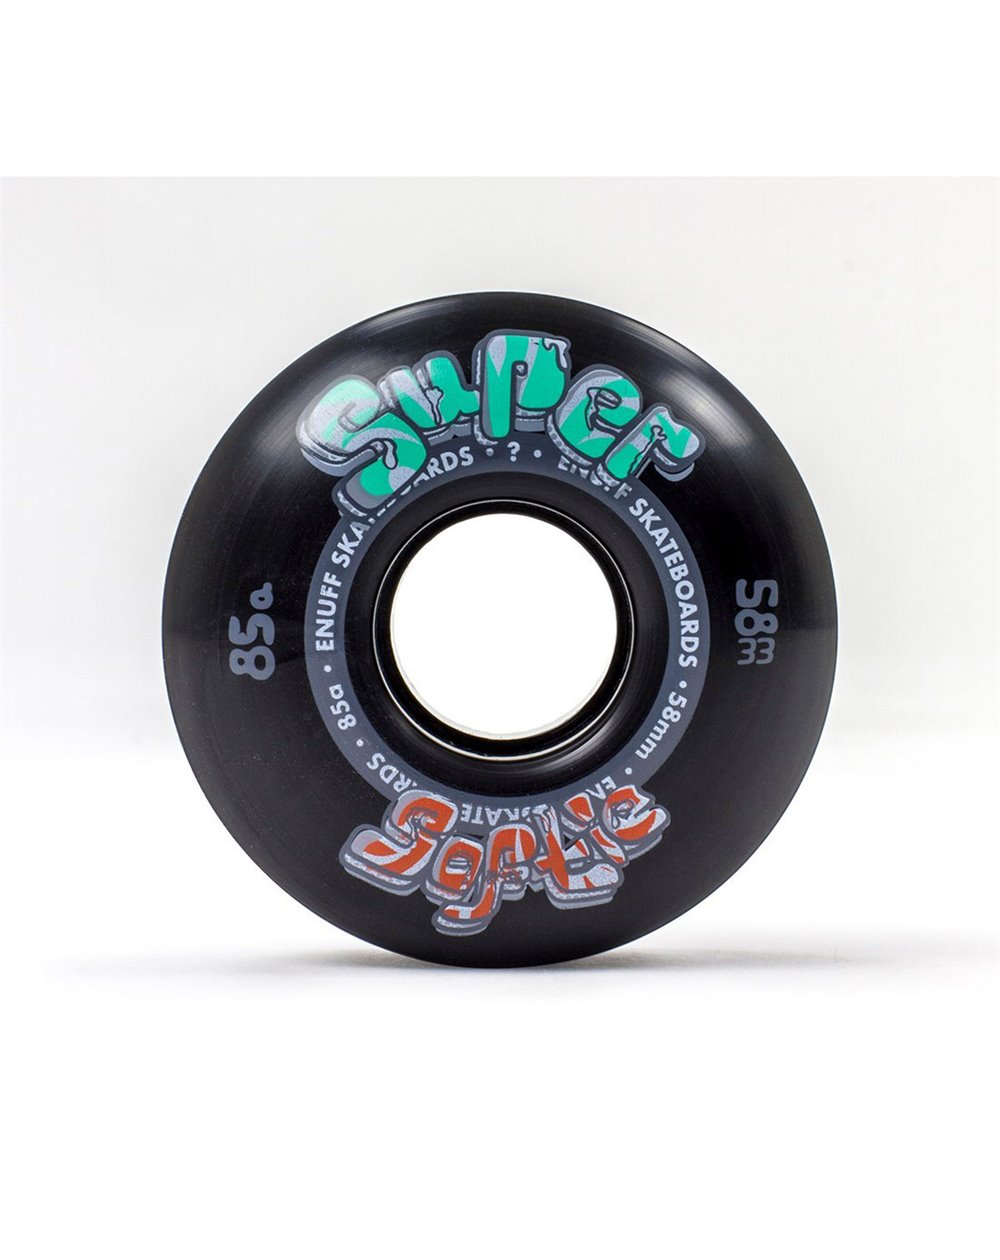 Enuff Roues Skateboard Super Softie 58mm 85A Black 4 pc